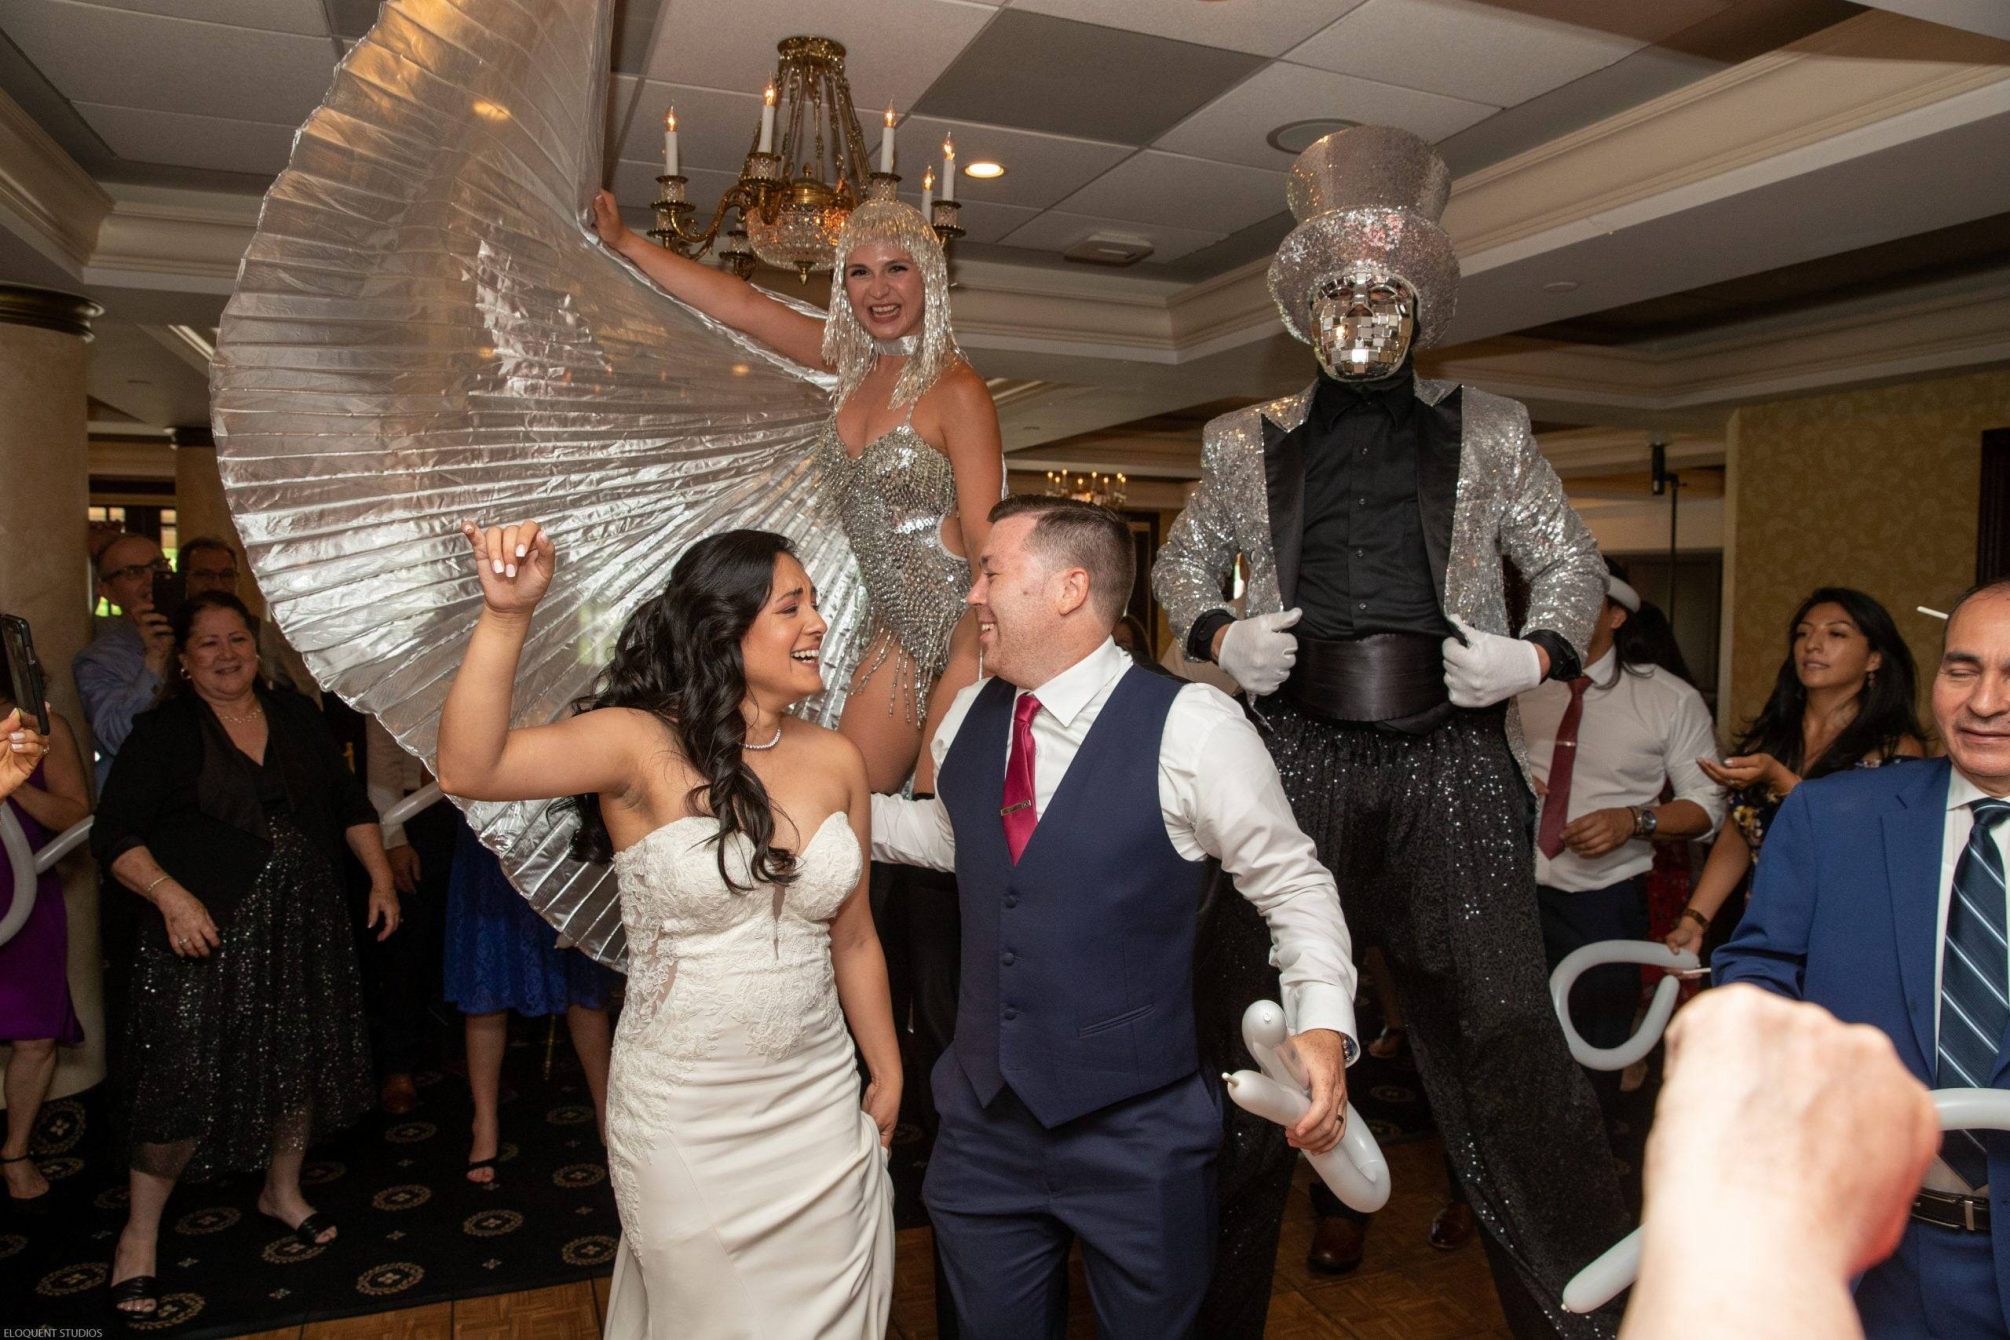 Brooklake bride and groom on dance floor with stilt walkers